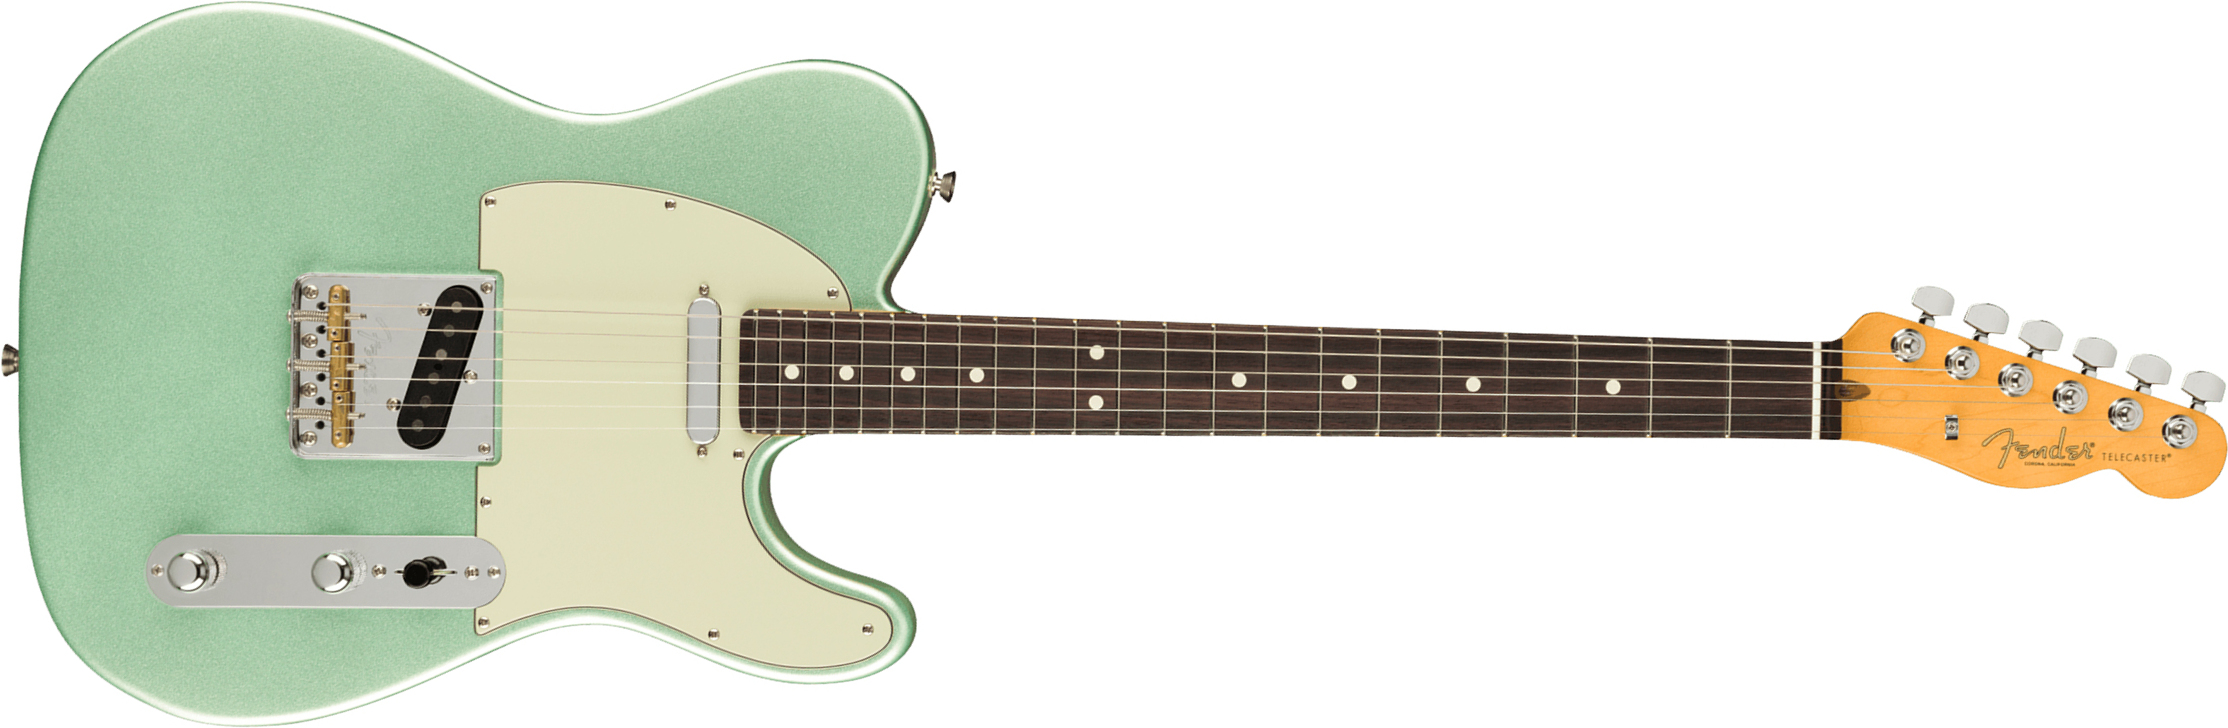 Fender Tele American Professional Ii Usa Rw - Mystic Surf Green - E-Gitarre in Teleform - Main picture